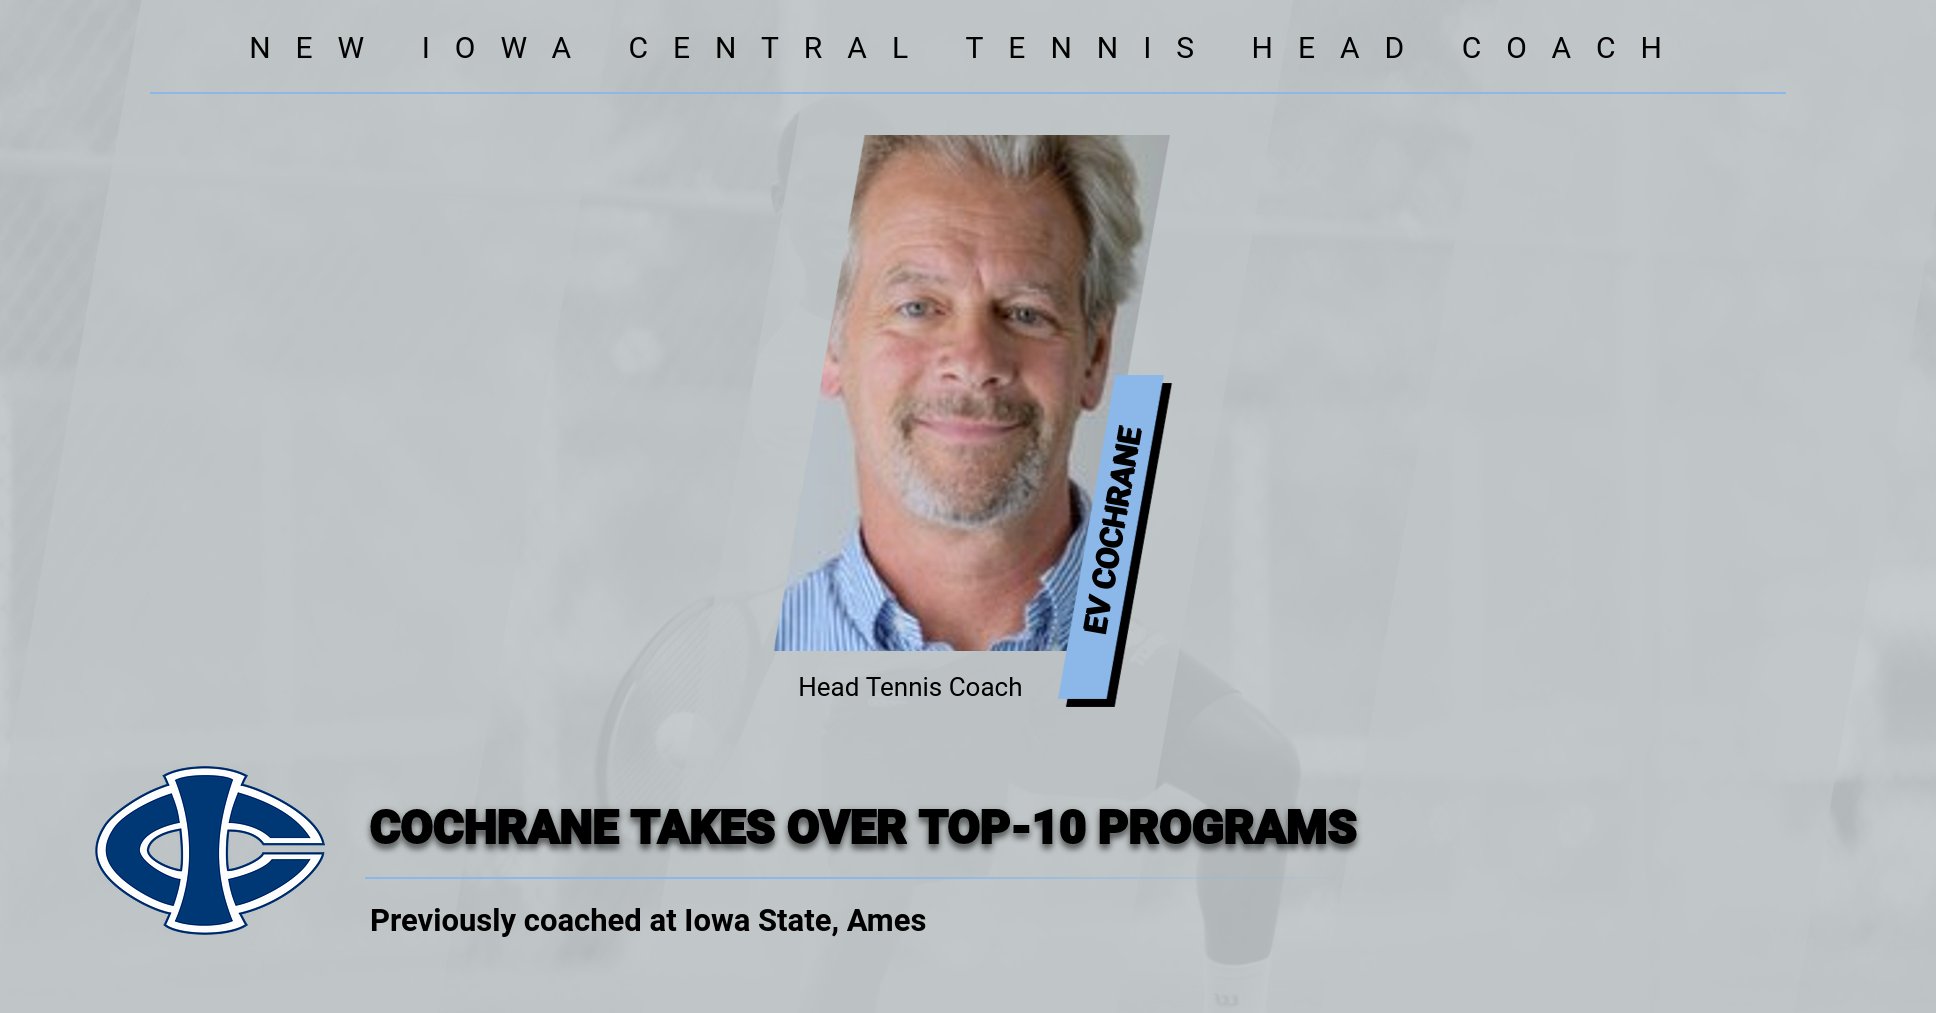 Cochrane named new tennis coach